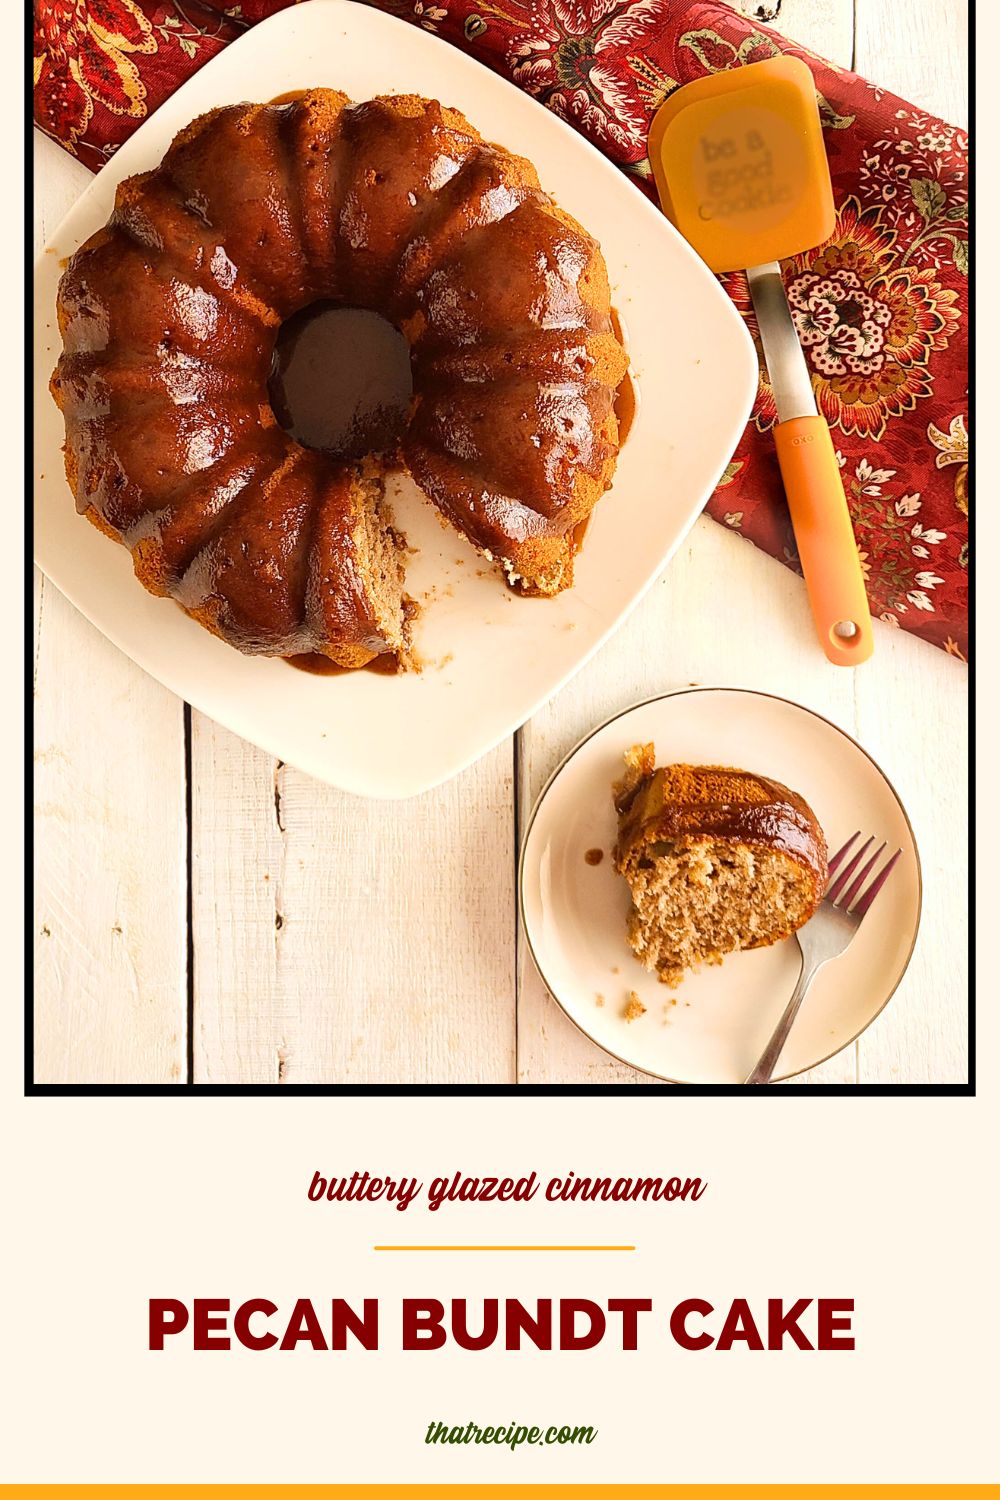 bundt cake with slice of cake and text overlay "buttery glazed cinnamon pecan bundt cake"